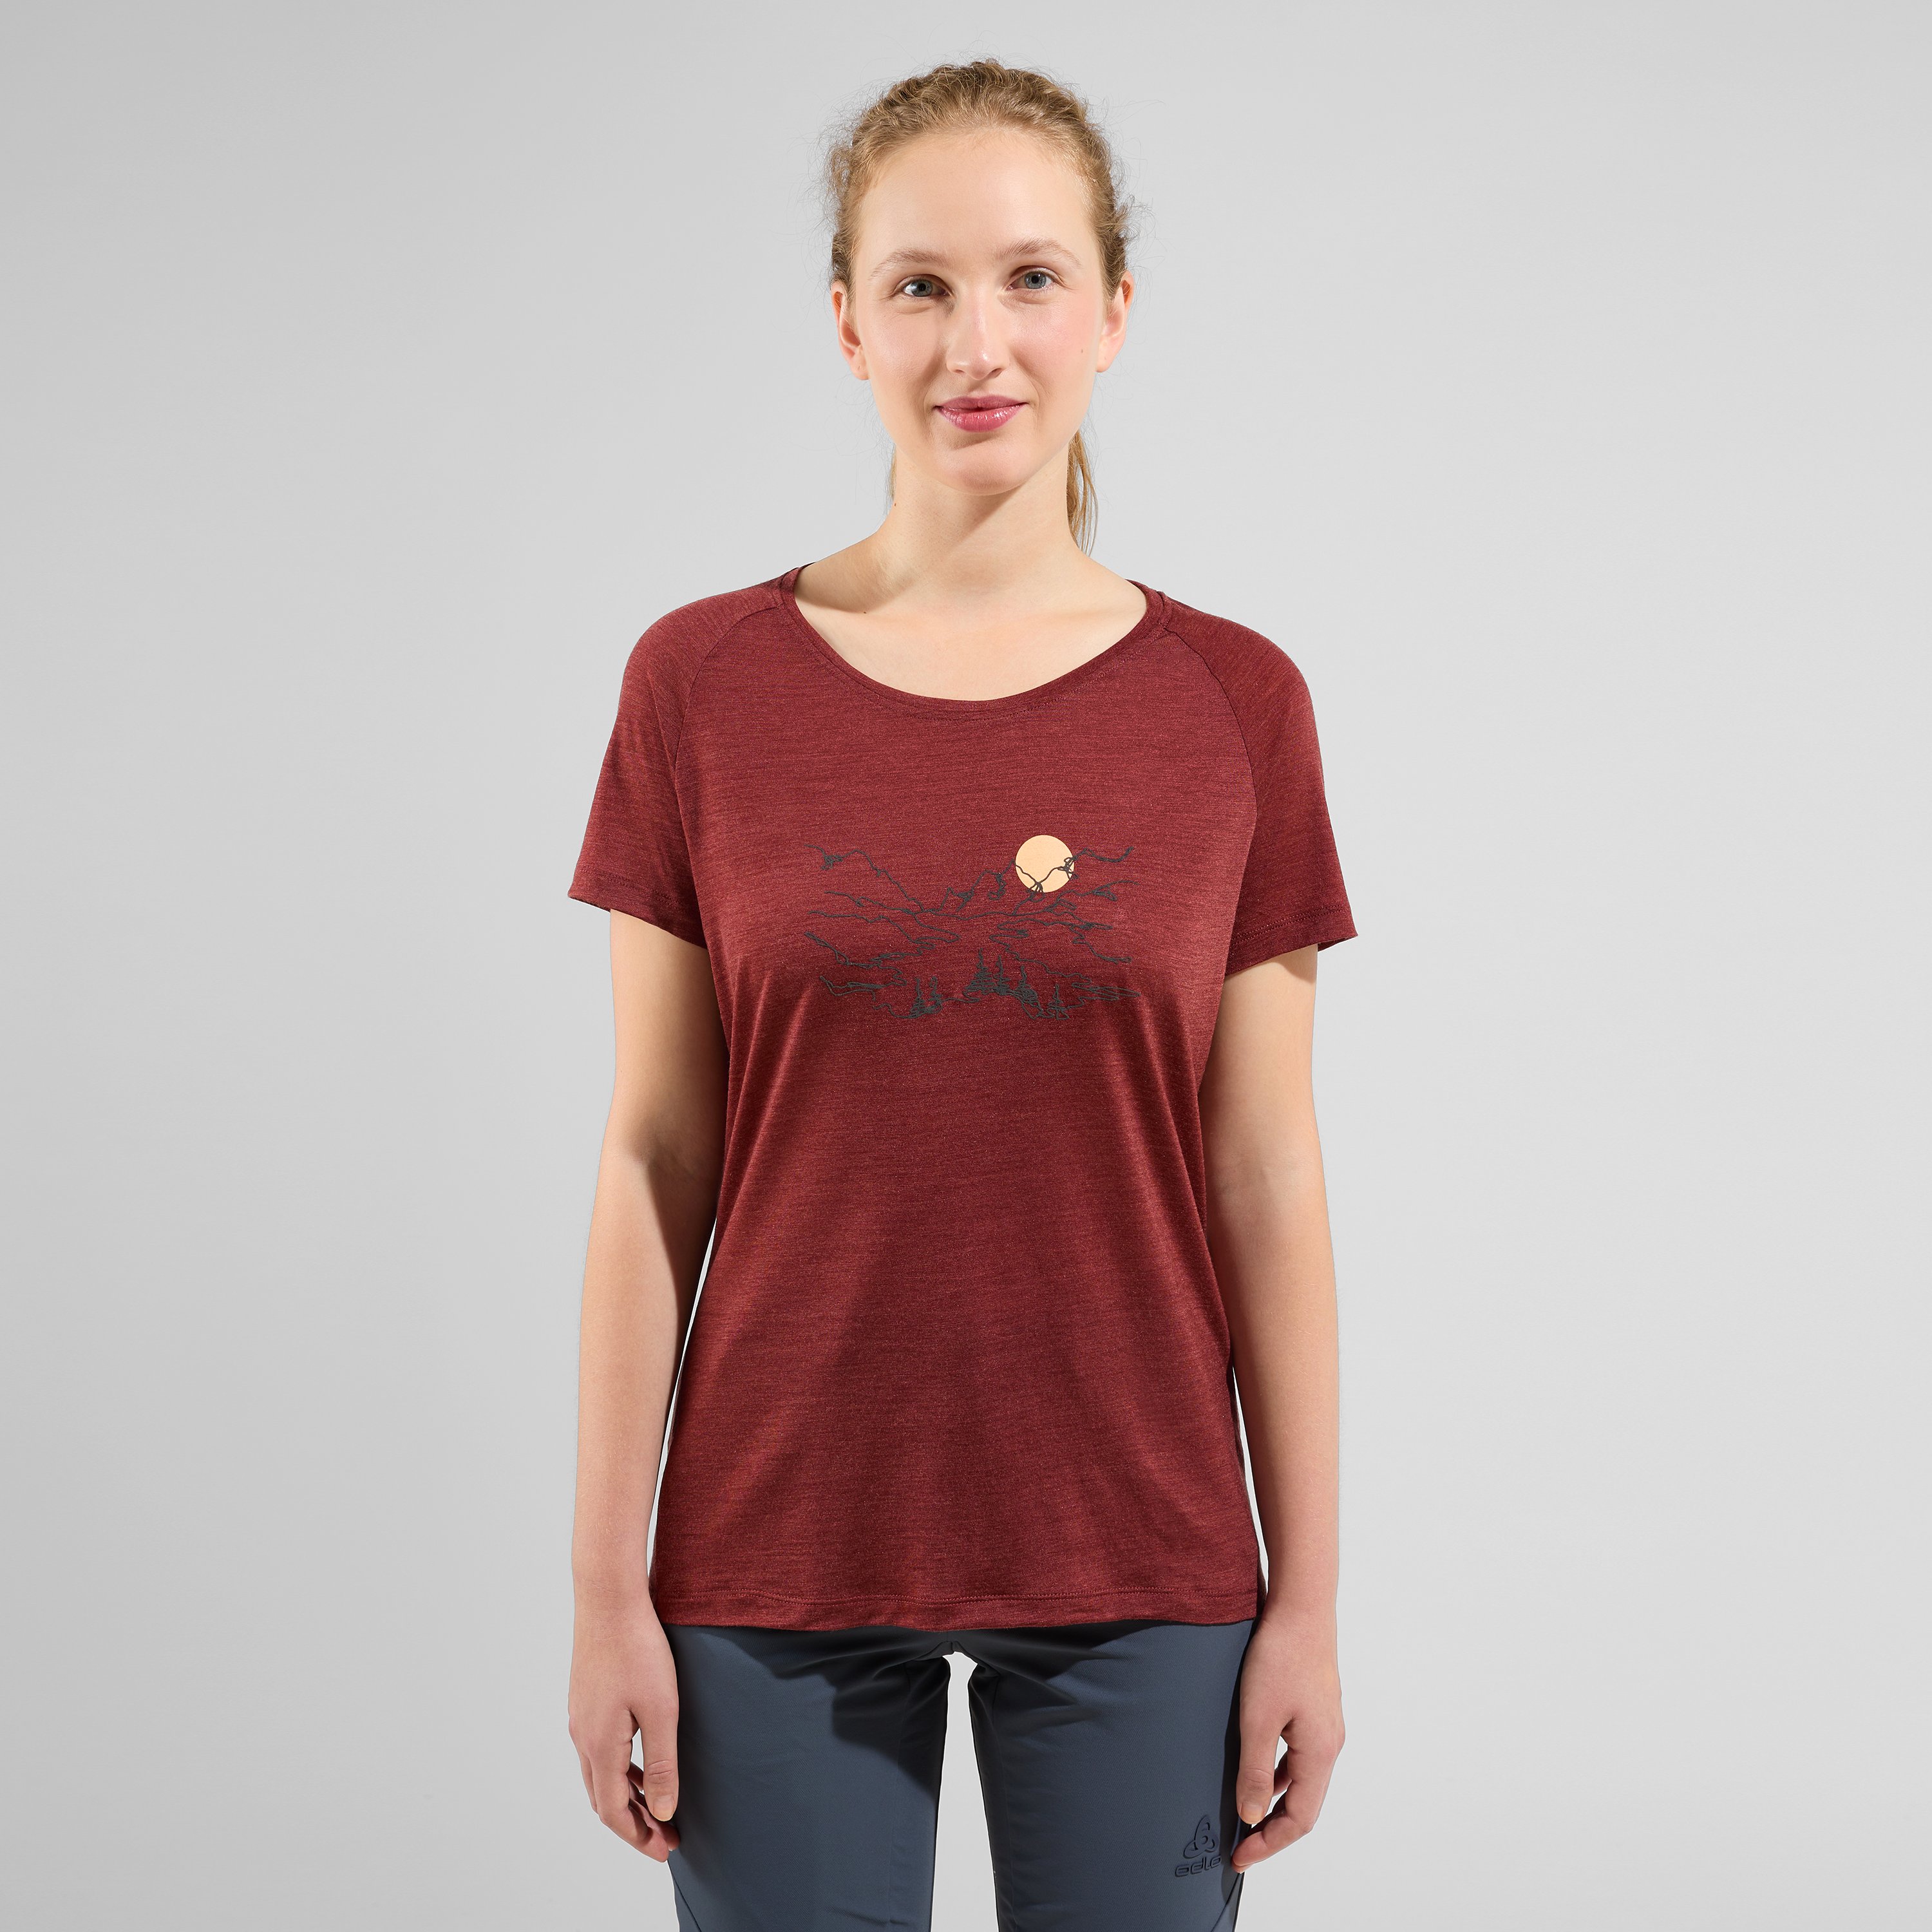 ODLO Ascent Performance Wool 130 T-Shirt mit Talprint für Damen, XL, rot